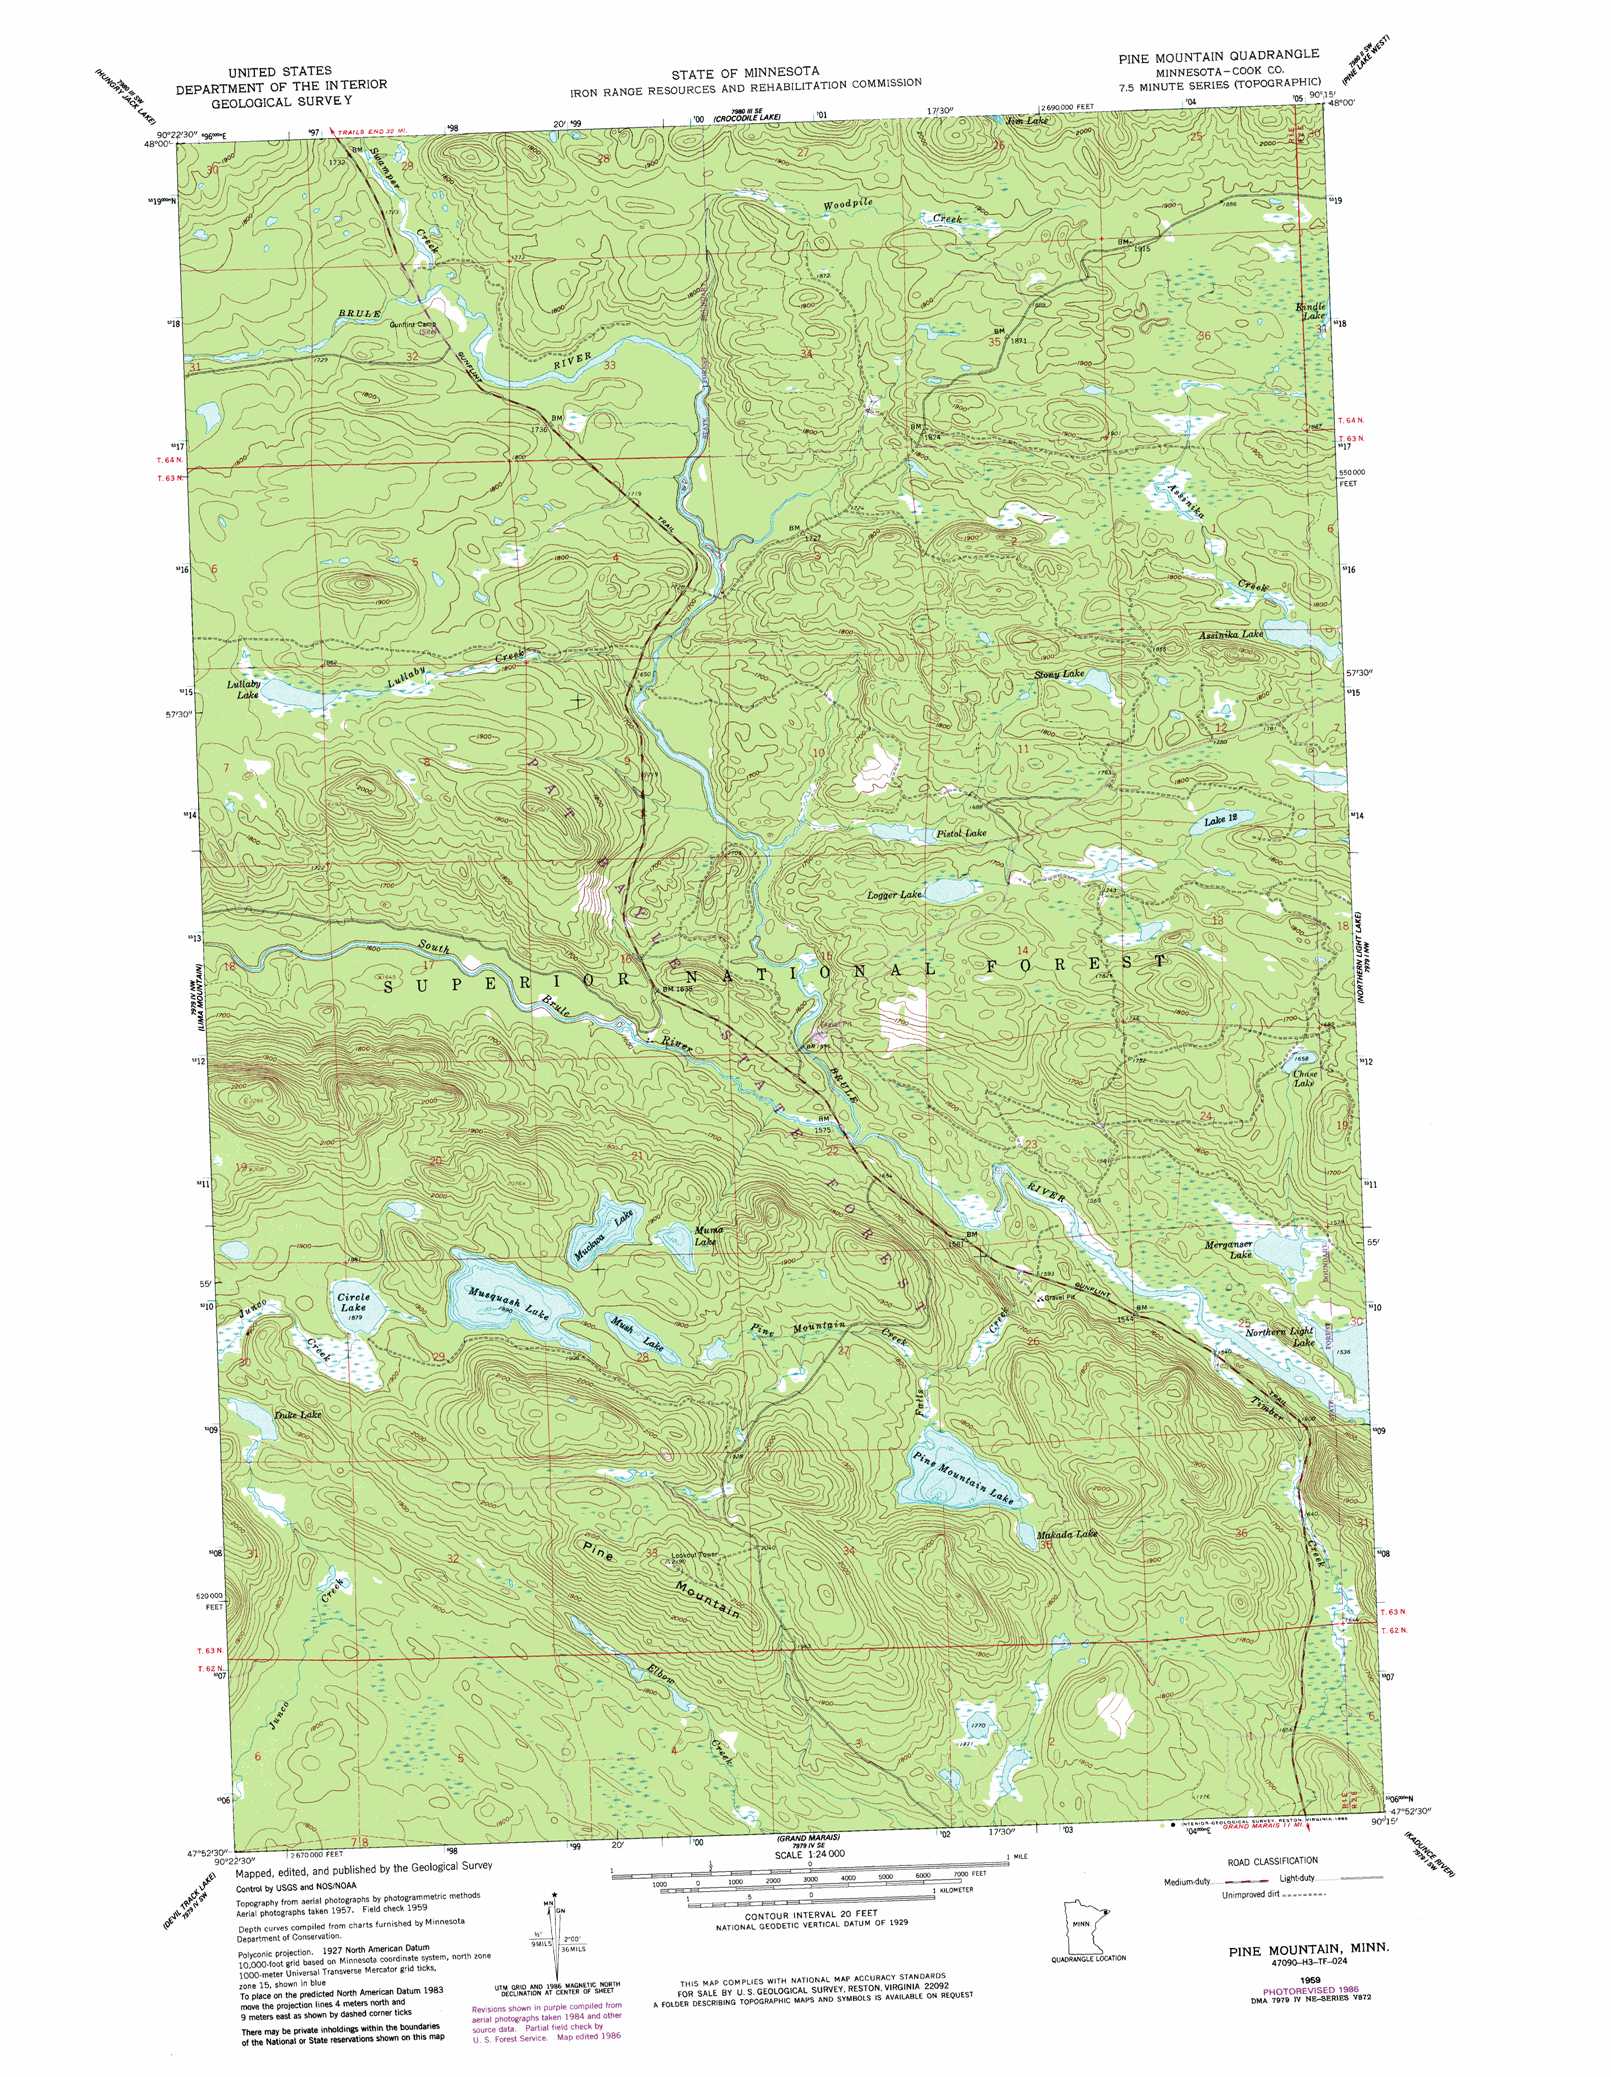 Pine Mountain topographic map, MN - USGS Topo Quad 47090h3